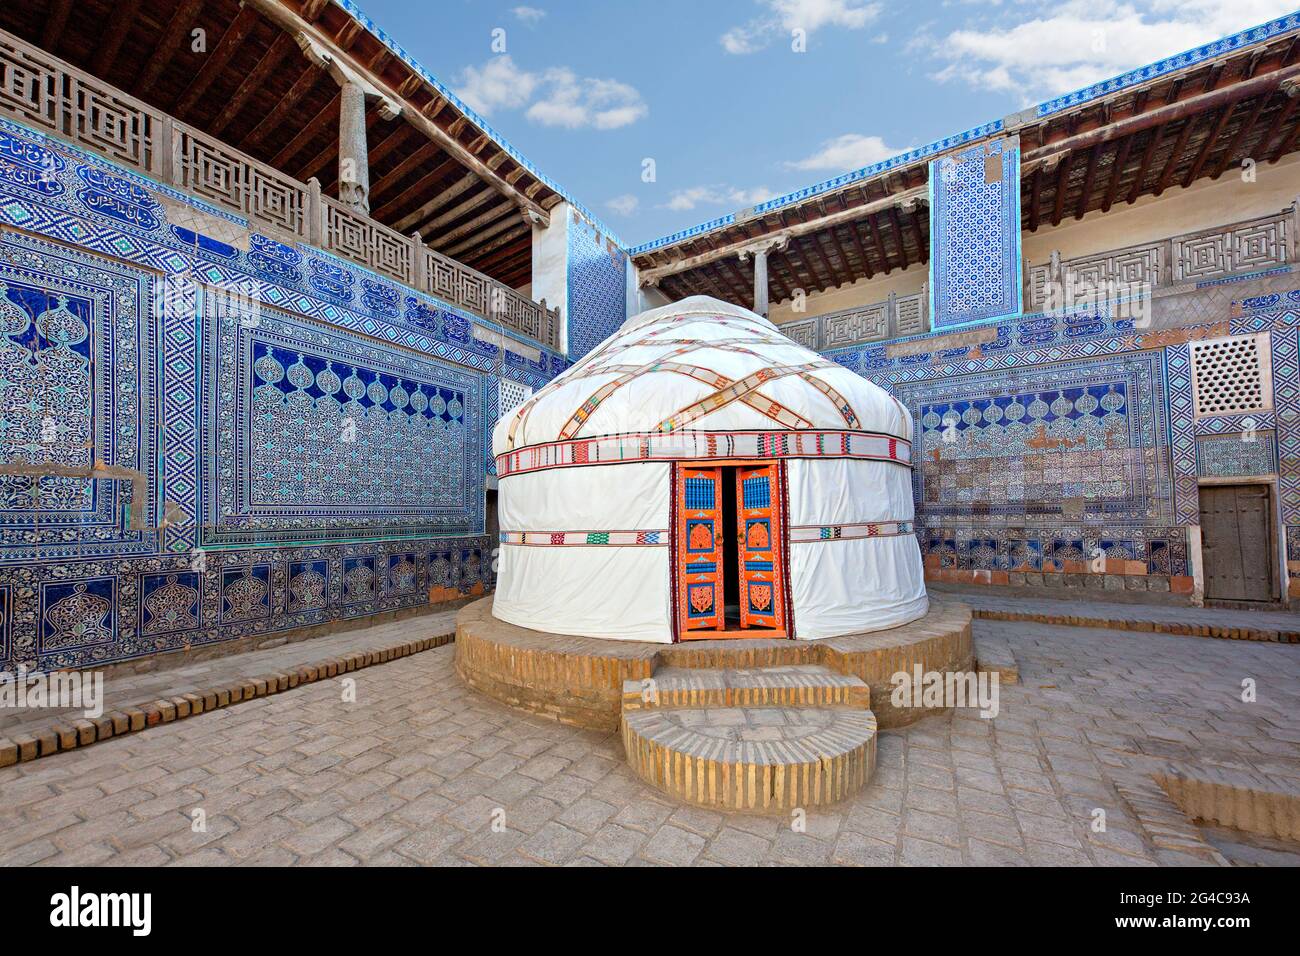 Nomadic yurt in the old town, Khiva, Uzbekistan Stock Photo